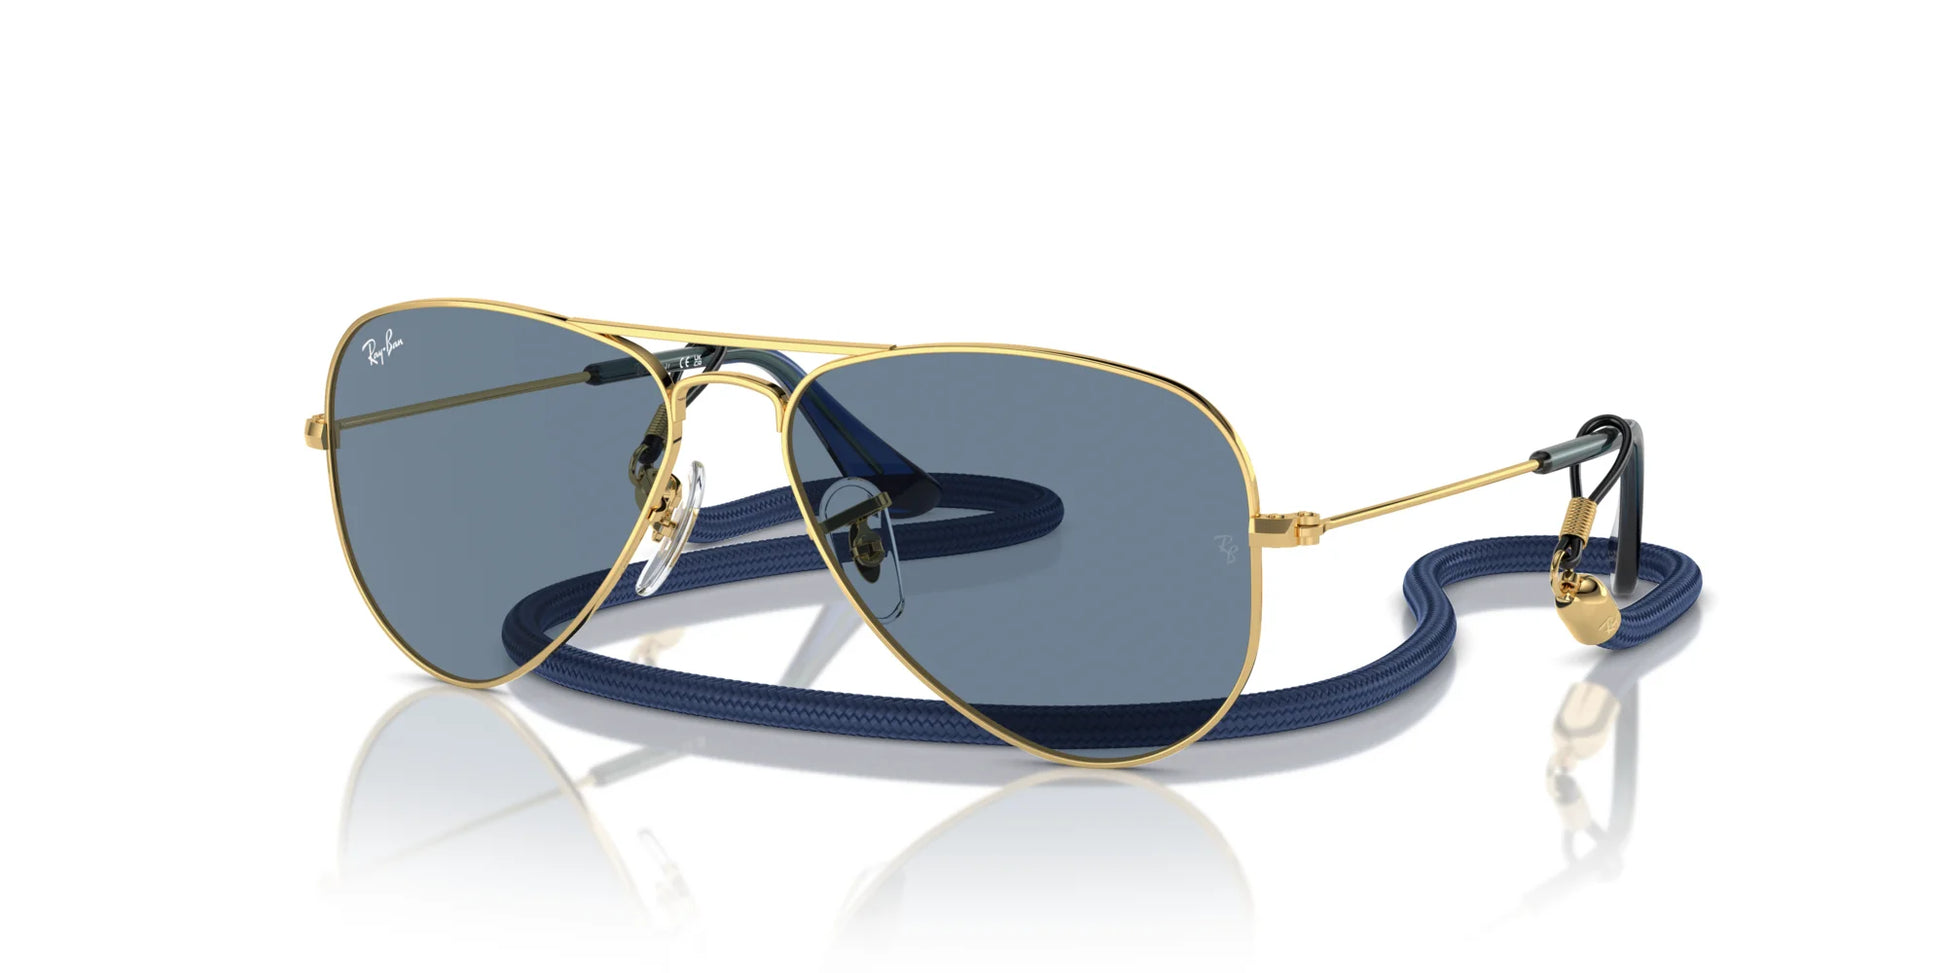 Ray-Ban JUNIOR AVIATOR RJ9506S Sunglasses Gold / Light Blue Mirror